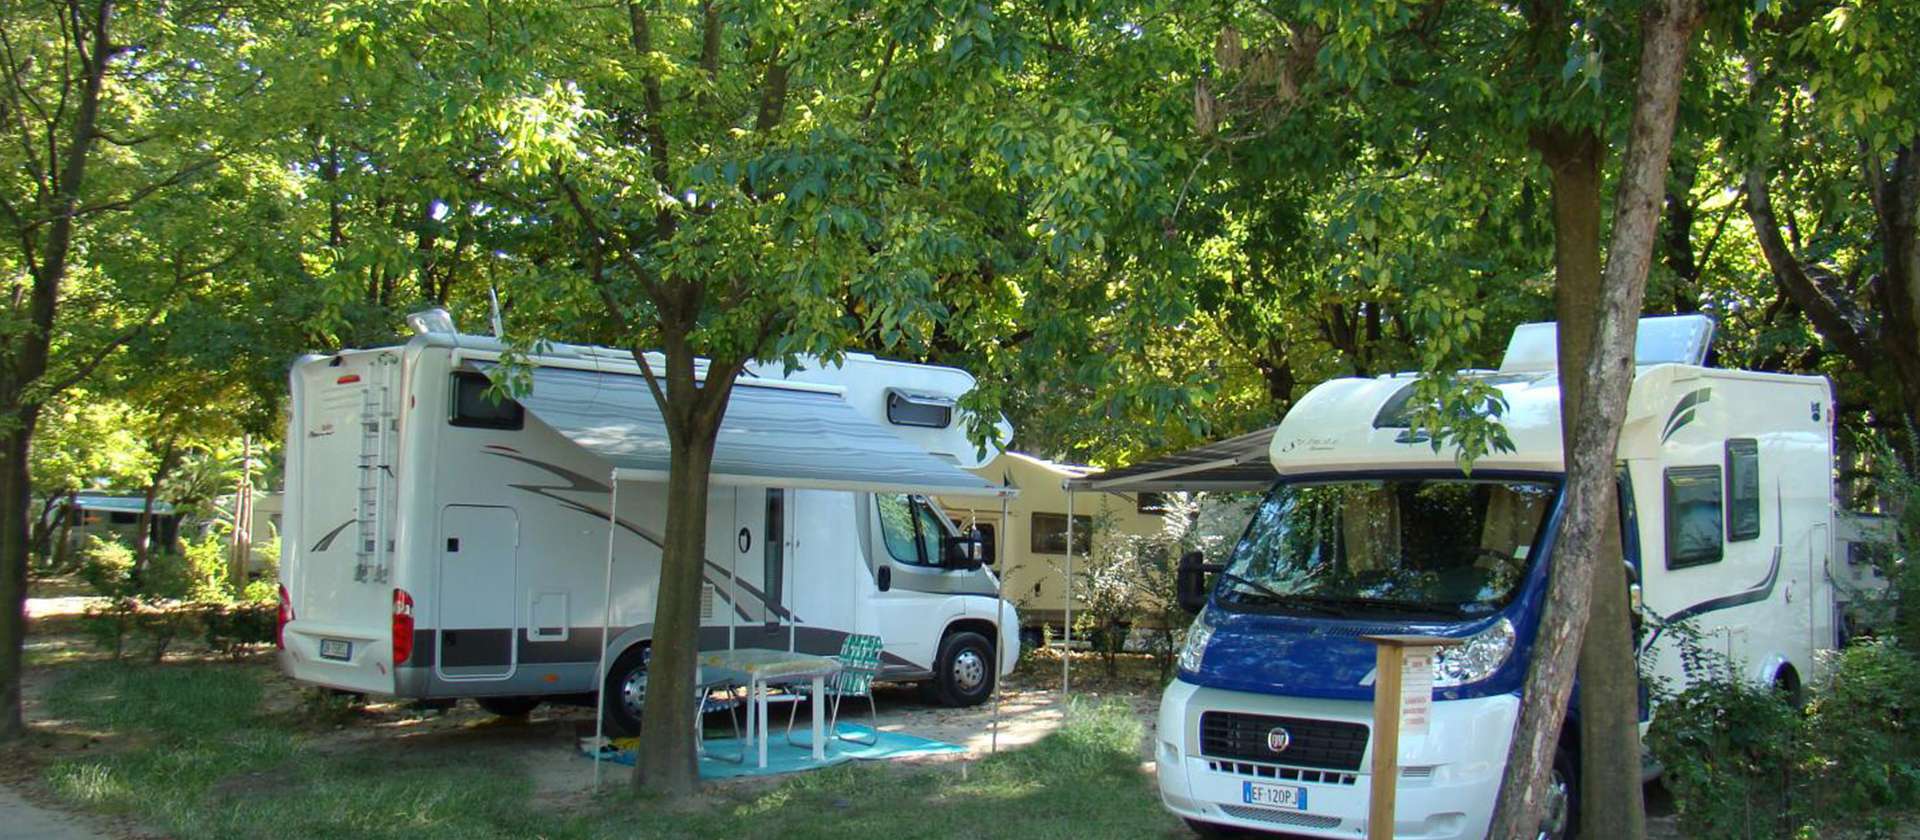 camping-mit-hund-sabbiadoro-italien-wohnmobile-unter-baeumen